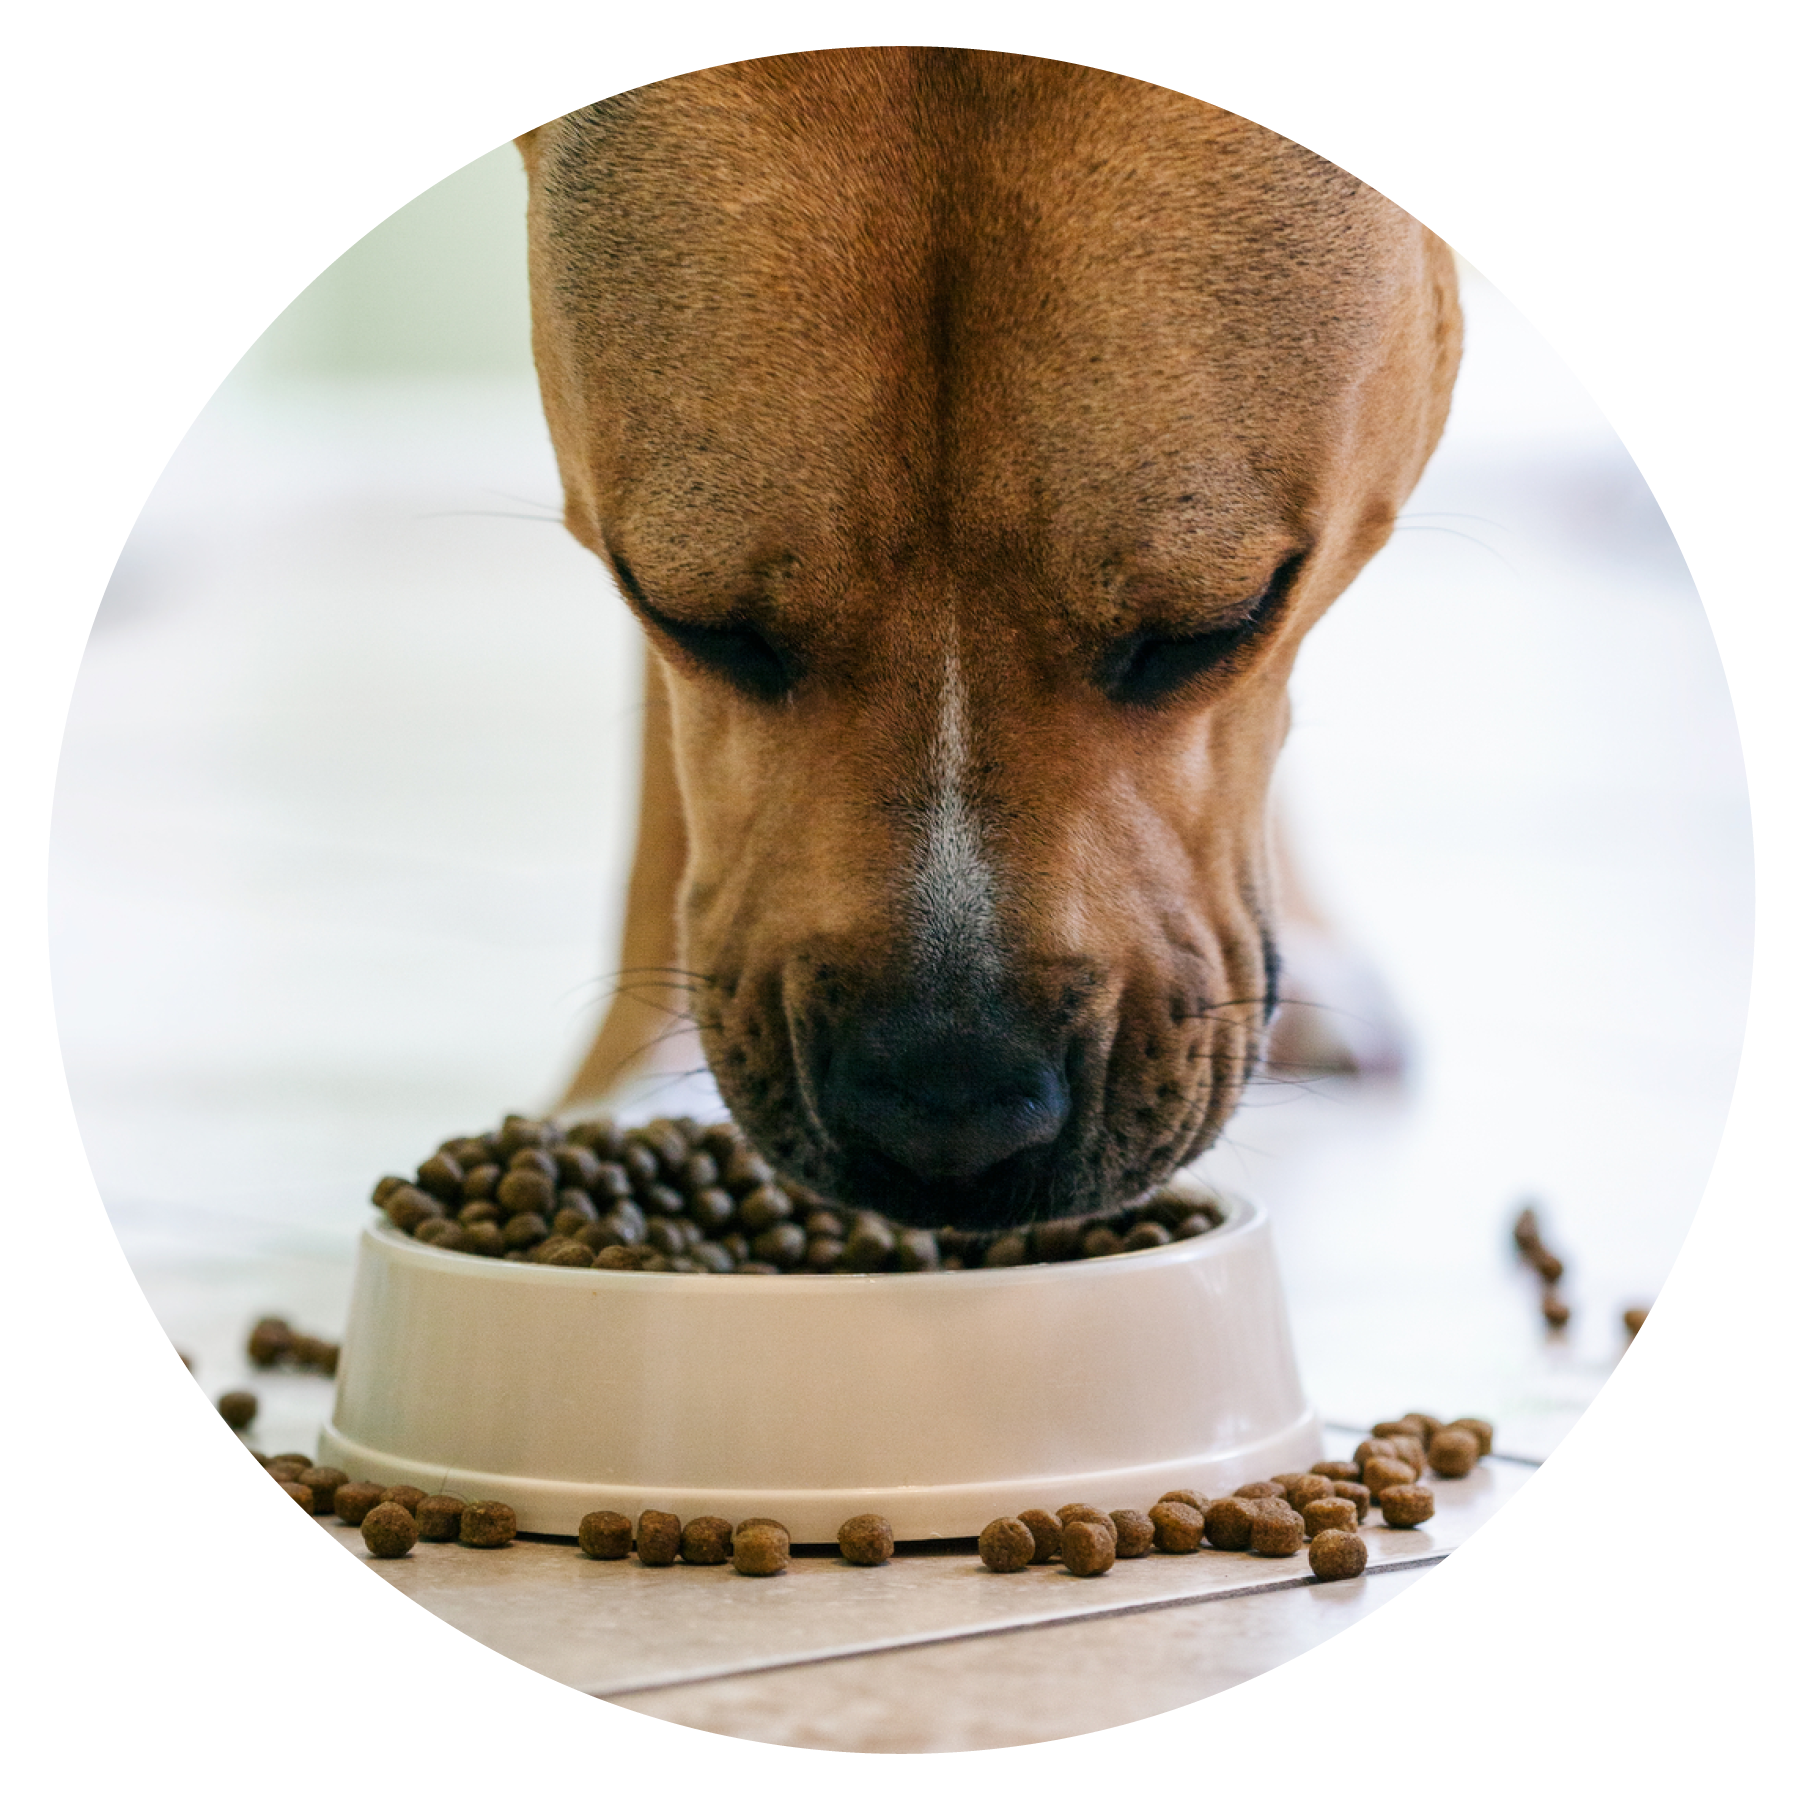 Dog eating bowl of dry kibble food overflowing food bowl